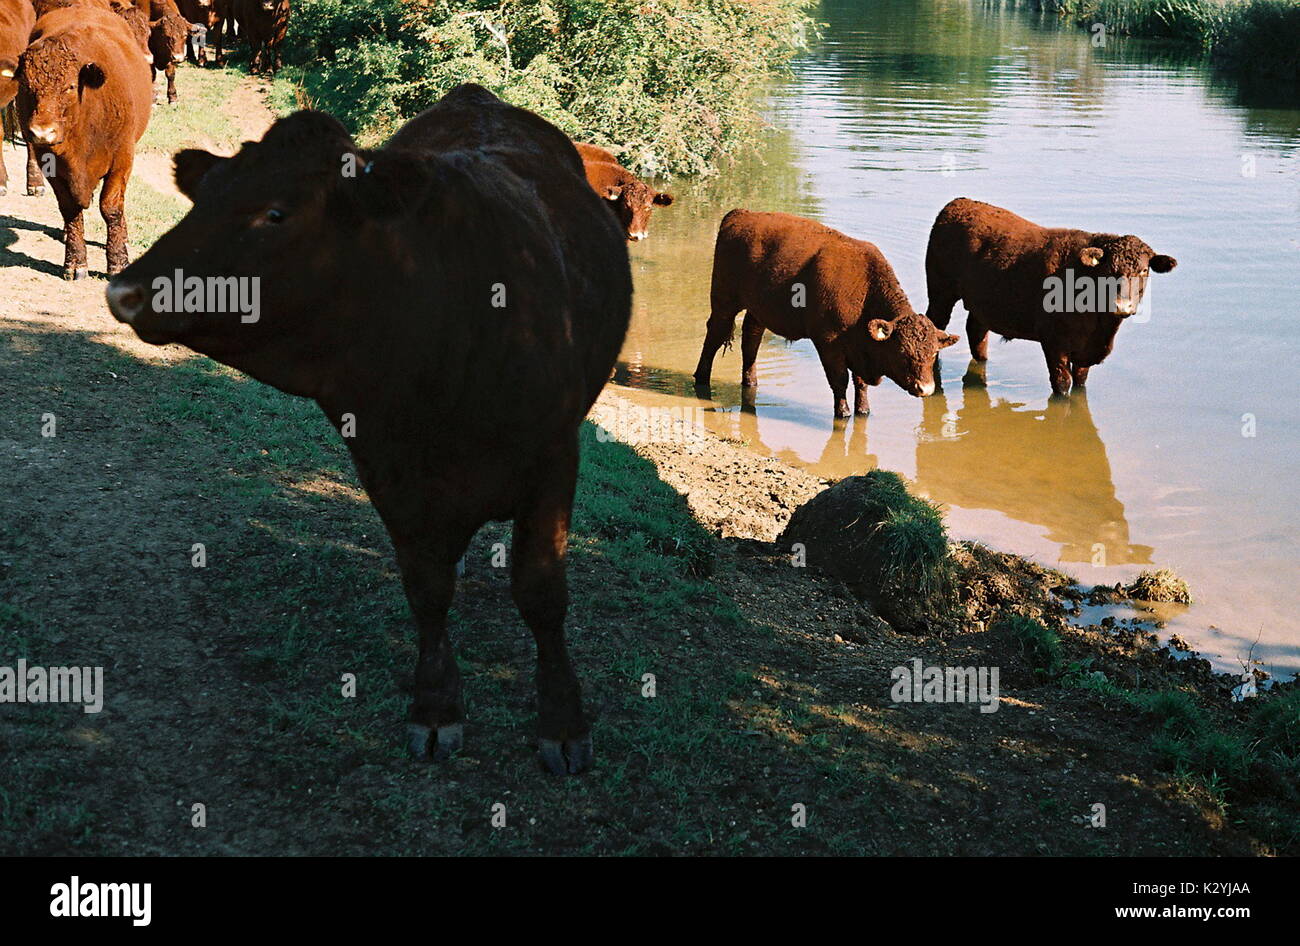 AJAXNETPHOTO. WITNEY,Inghilterra. - Bestiame annaffiando foro - tori sulle rive del fiume Tamigi. Foto:JONATHAN EASTLAND/AJAX REF:TC173617 11 Foto Stock